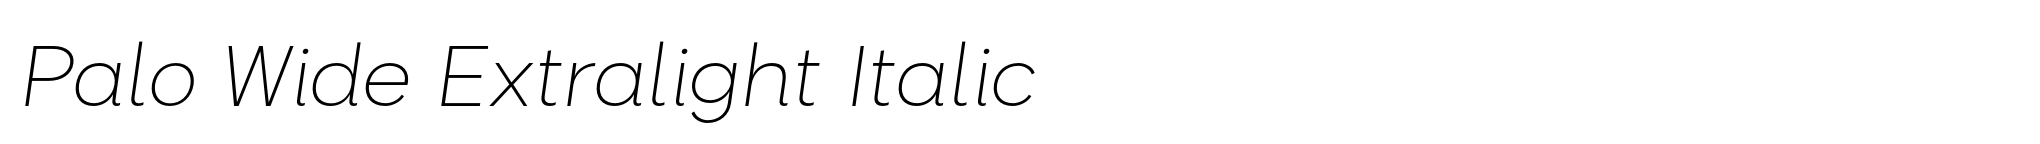 Palo Wide Extralight Italic image